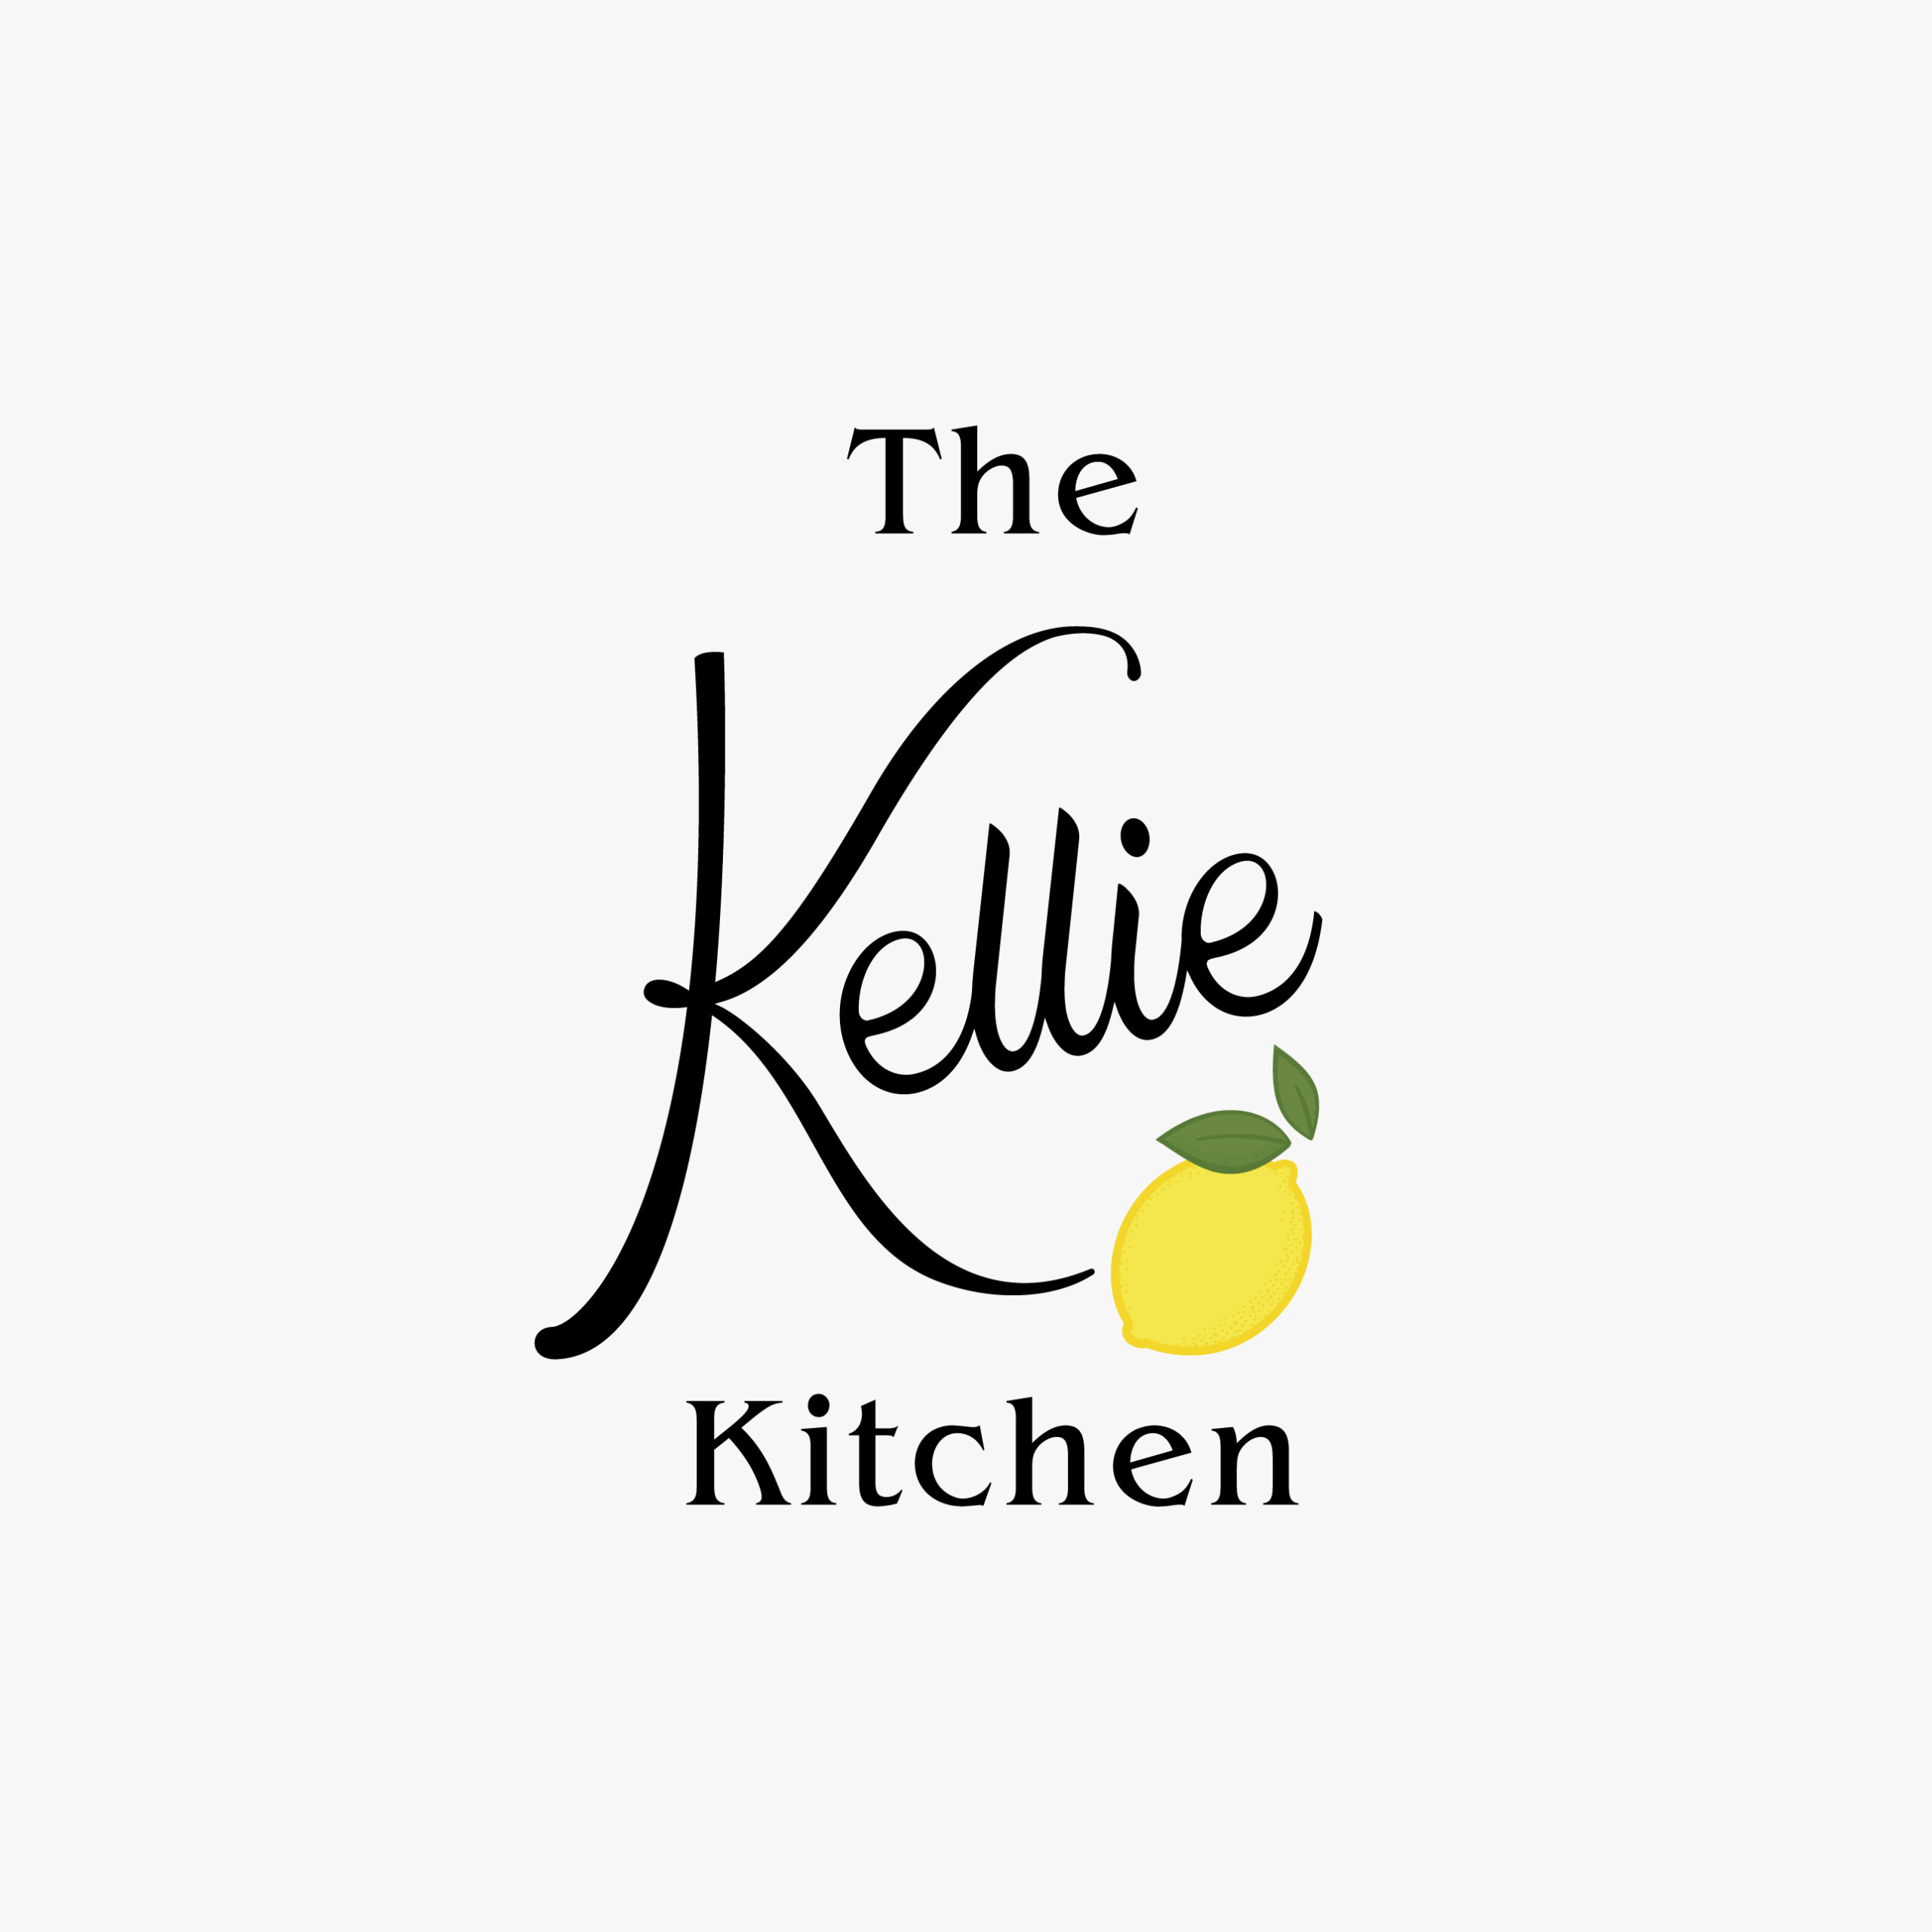 The Kellie Kitchen